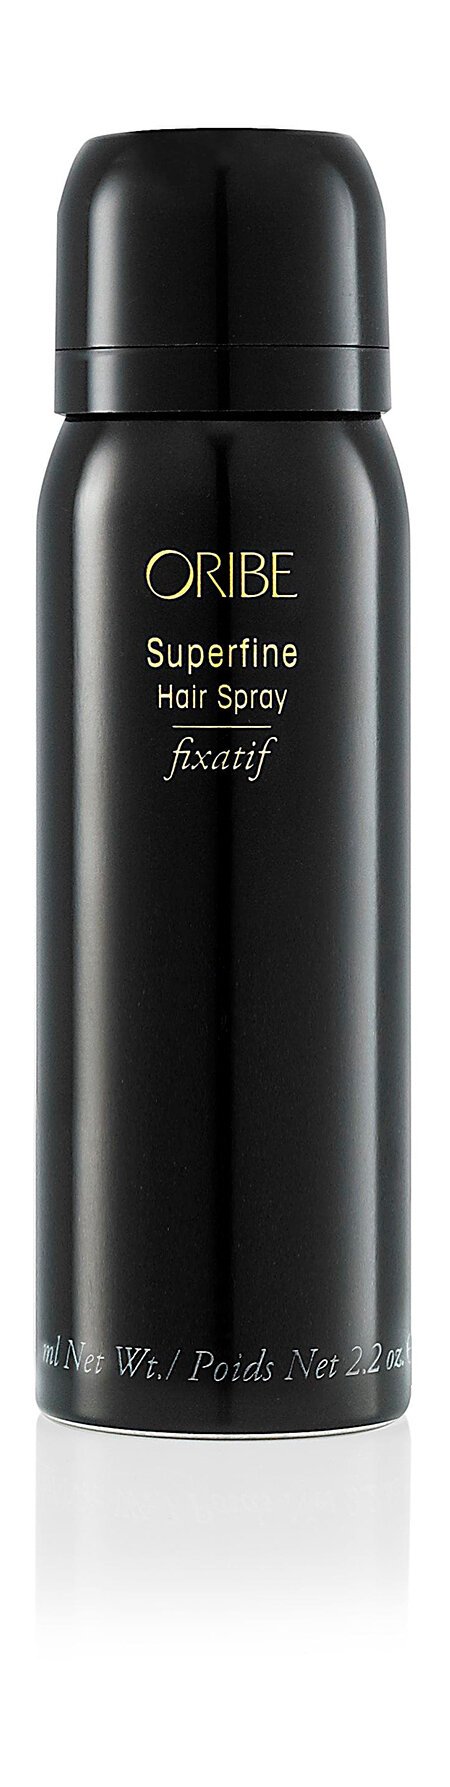 Спрей для средней фиксации Oribe Superfine Hair Spray Travel Size /75 мл/гр.